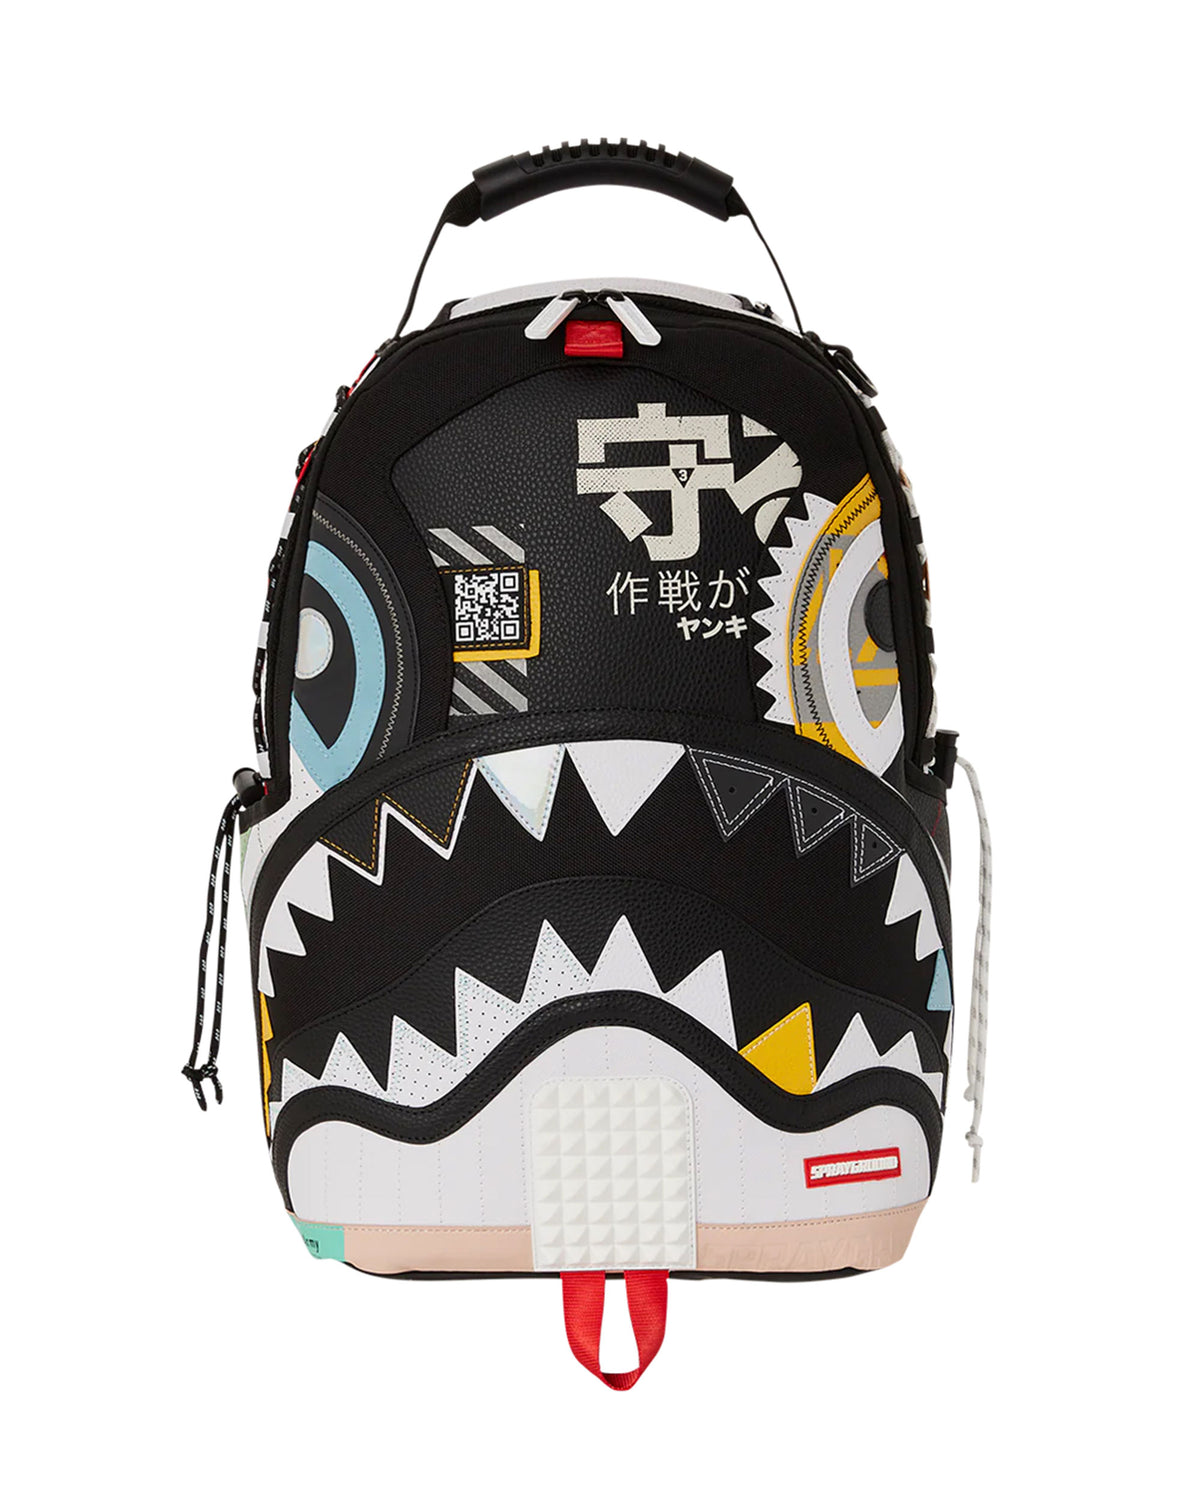 Sprayground Air Shark V2 Ultimate Backpack